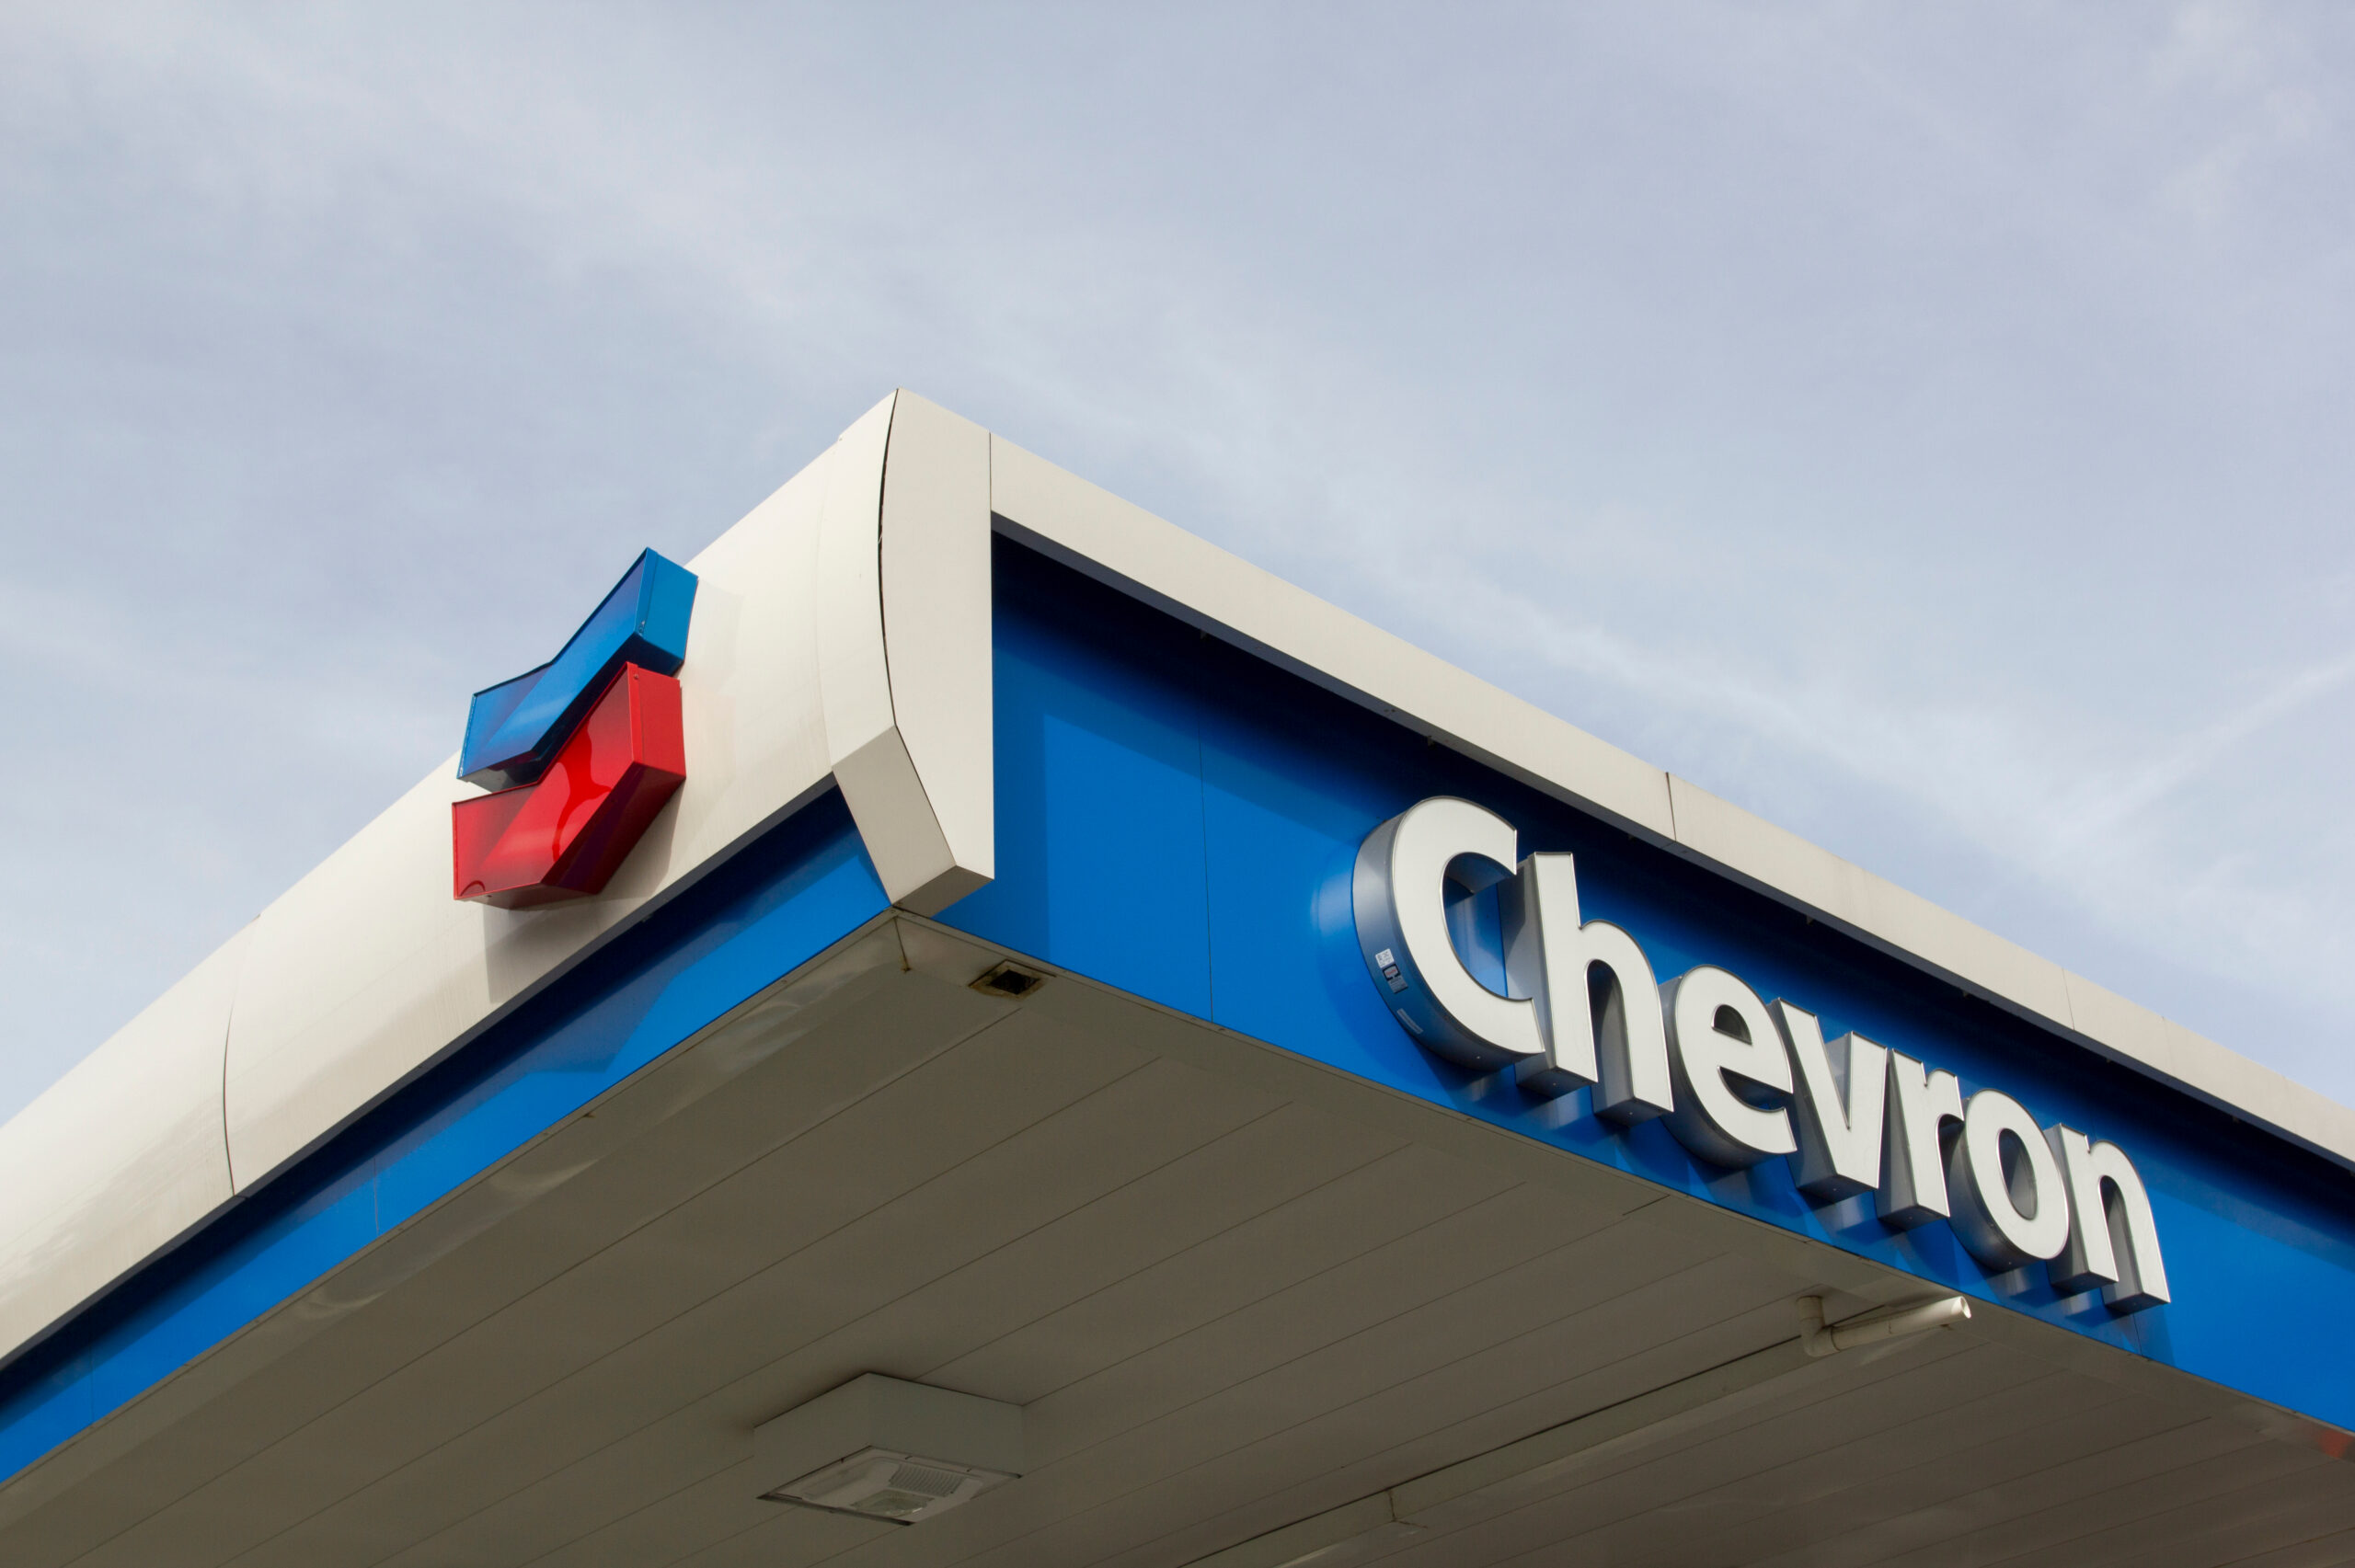 Stock image of the Chevron logo